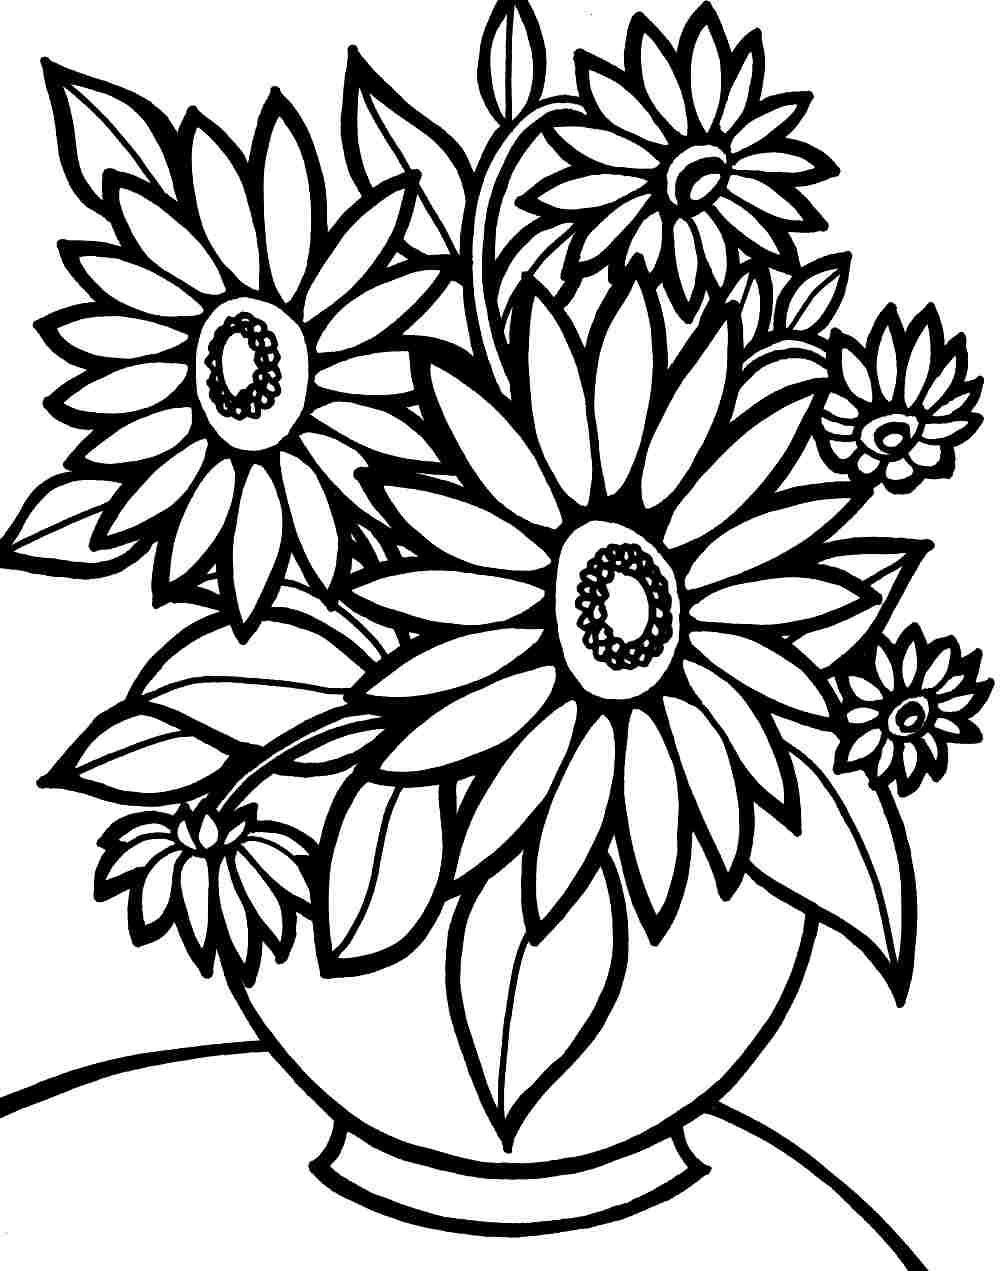 Pinhema On Drawing | Pinterest | Flower Coloring Pages - Free Printable Flower Coloring Pages